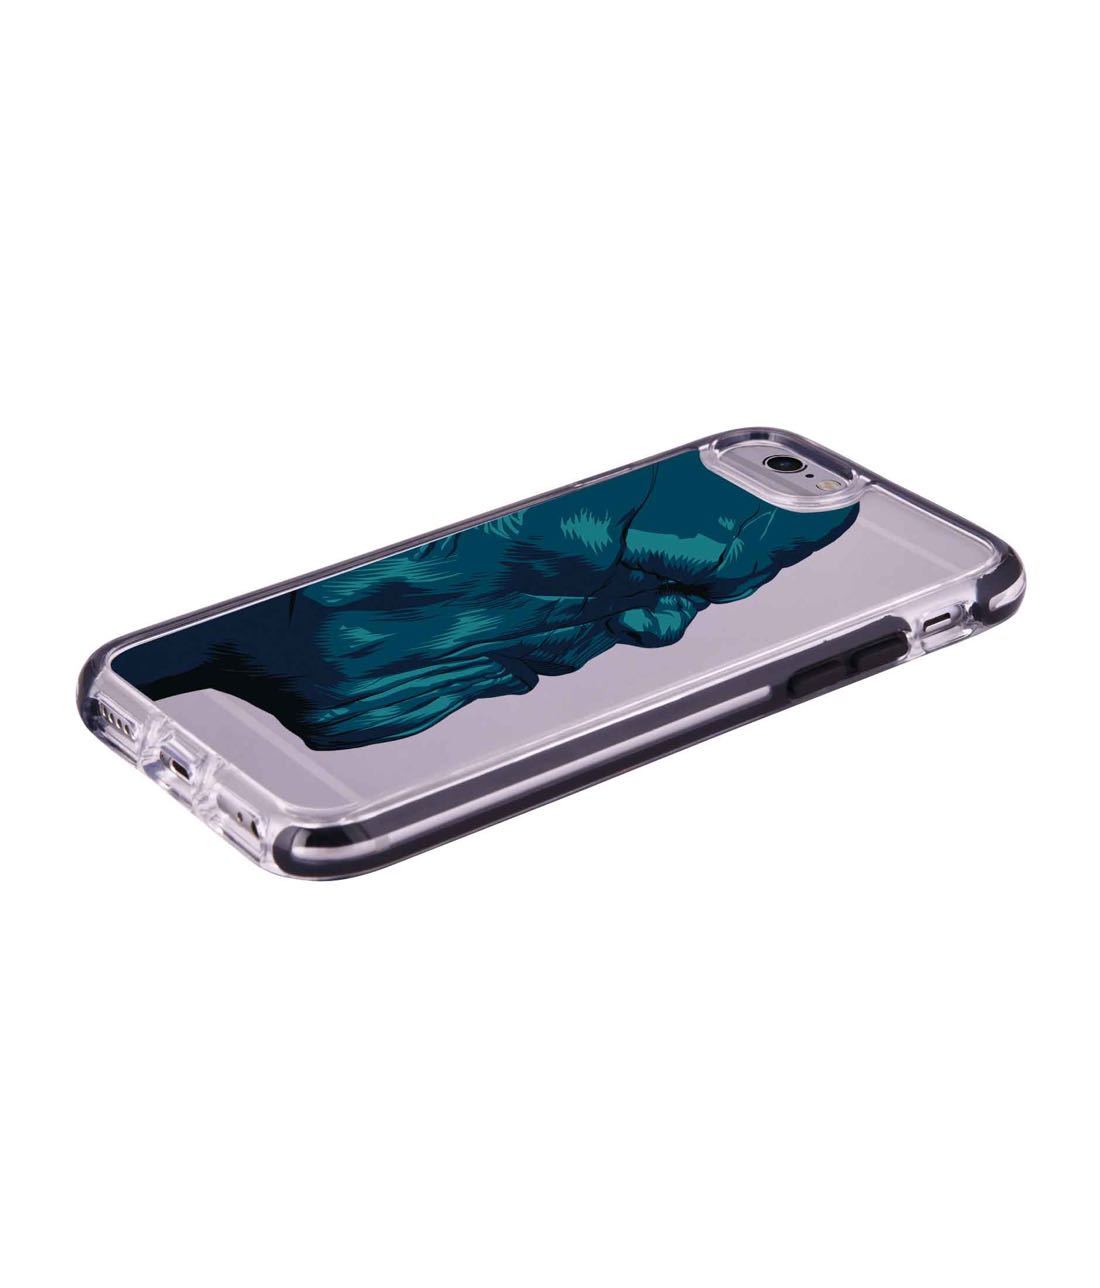 Illuminated Thanos - Extreme Phone Case for iPhone 6S Plus